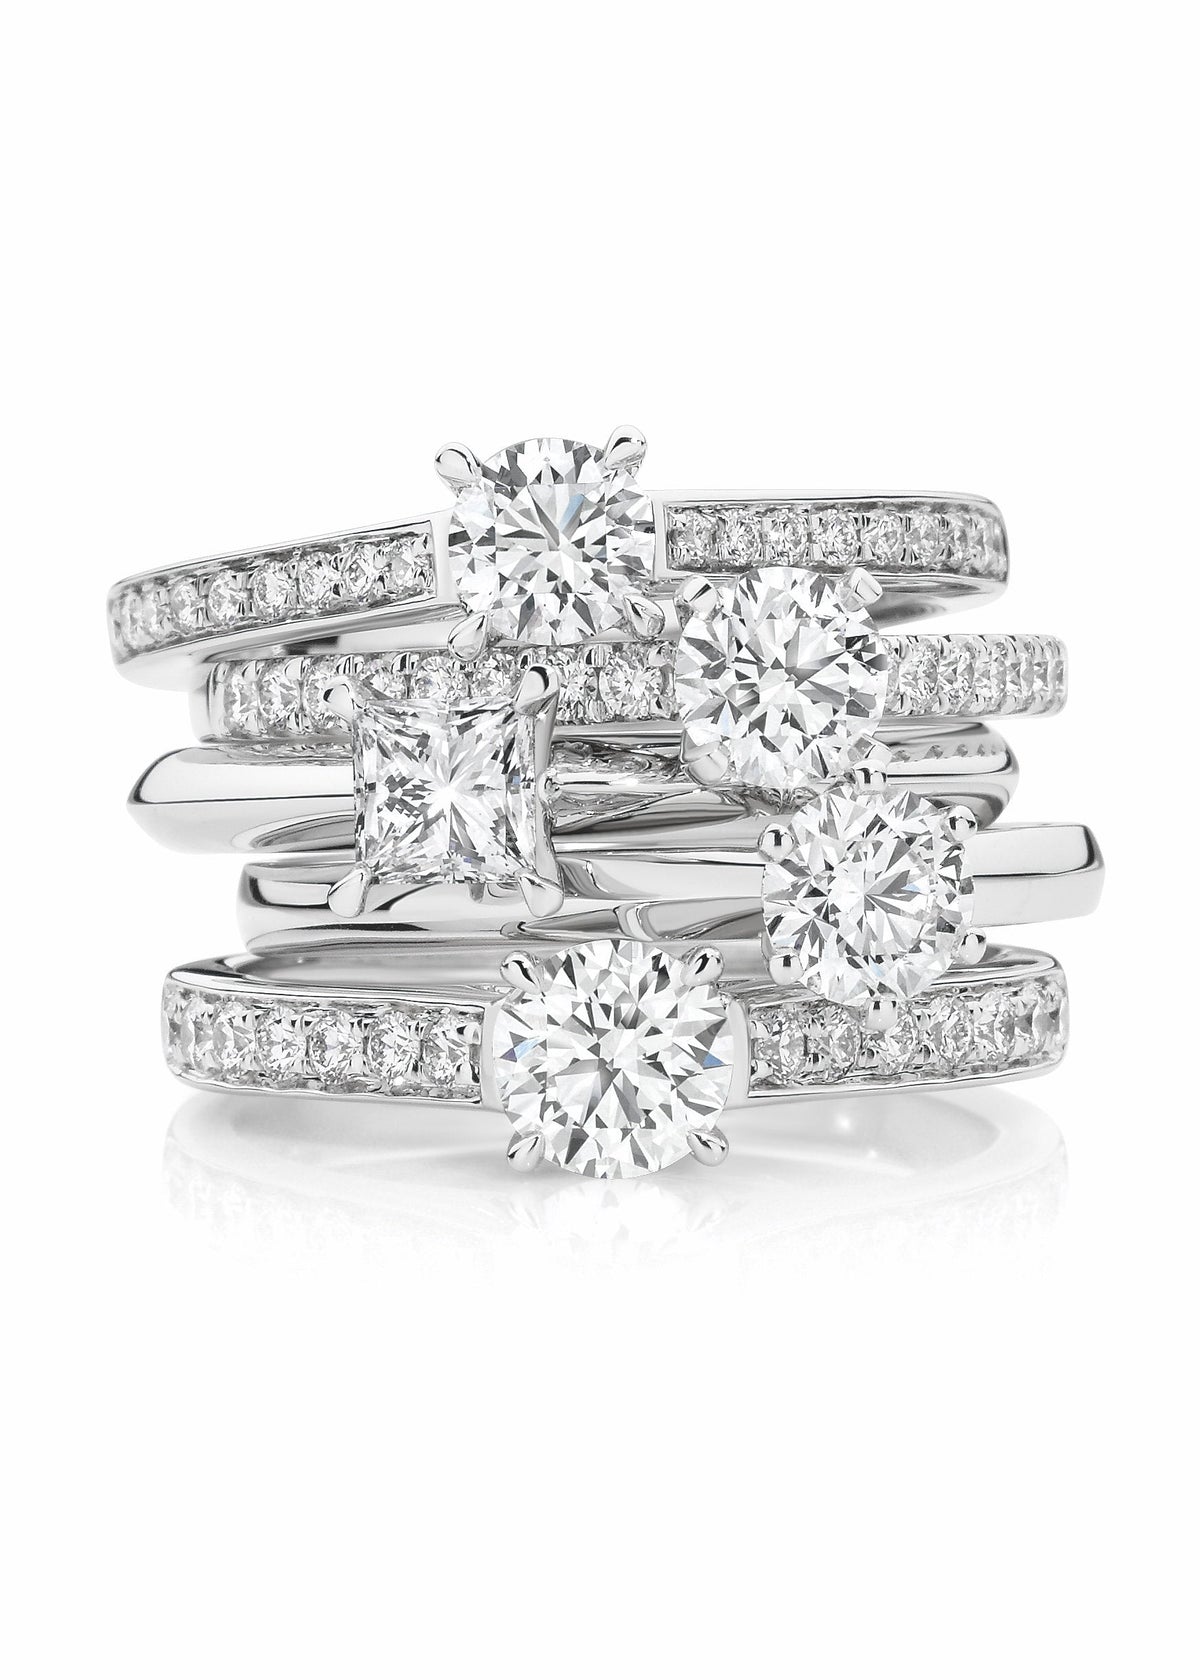 Engagement Rings - Duffs Jewellers Geelong